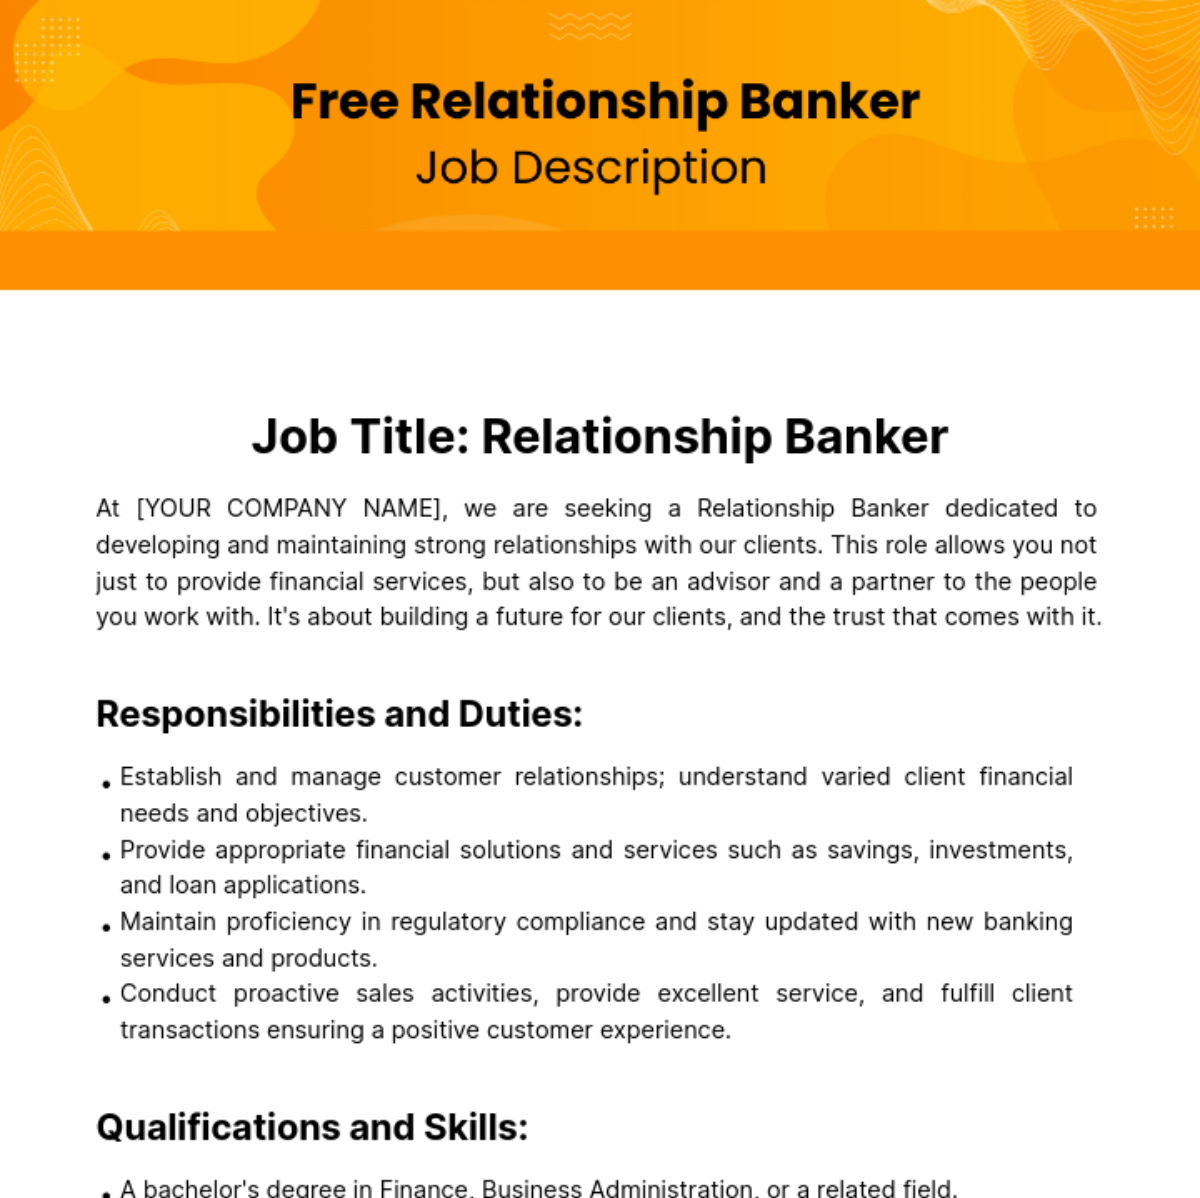 Free Relationship Banker Job Description Template